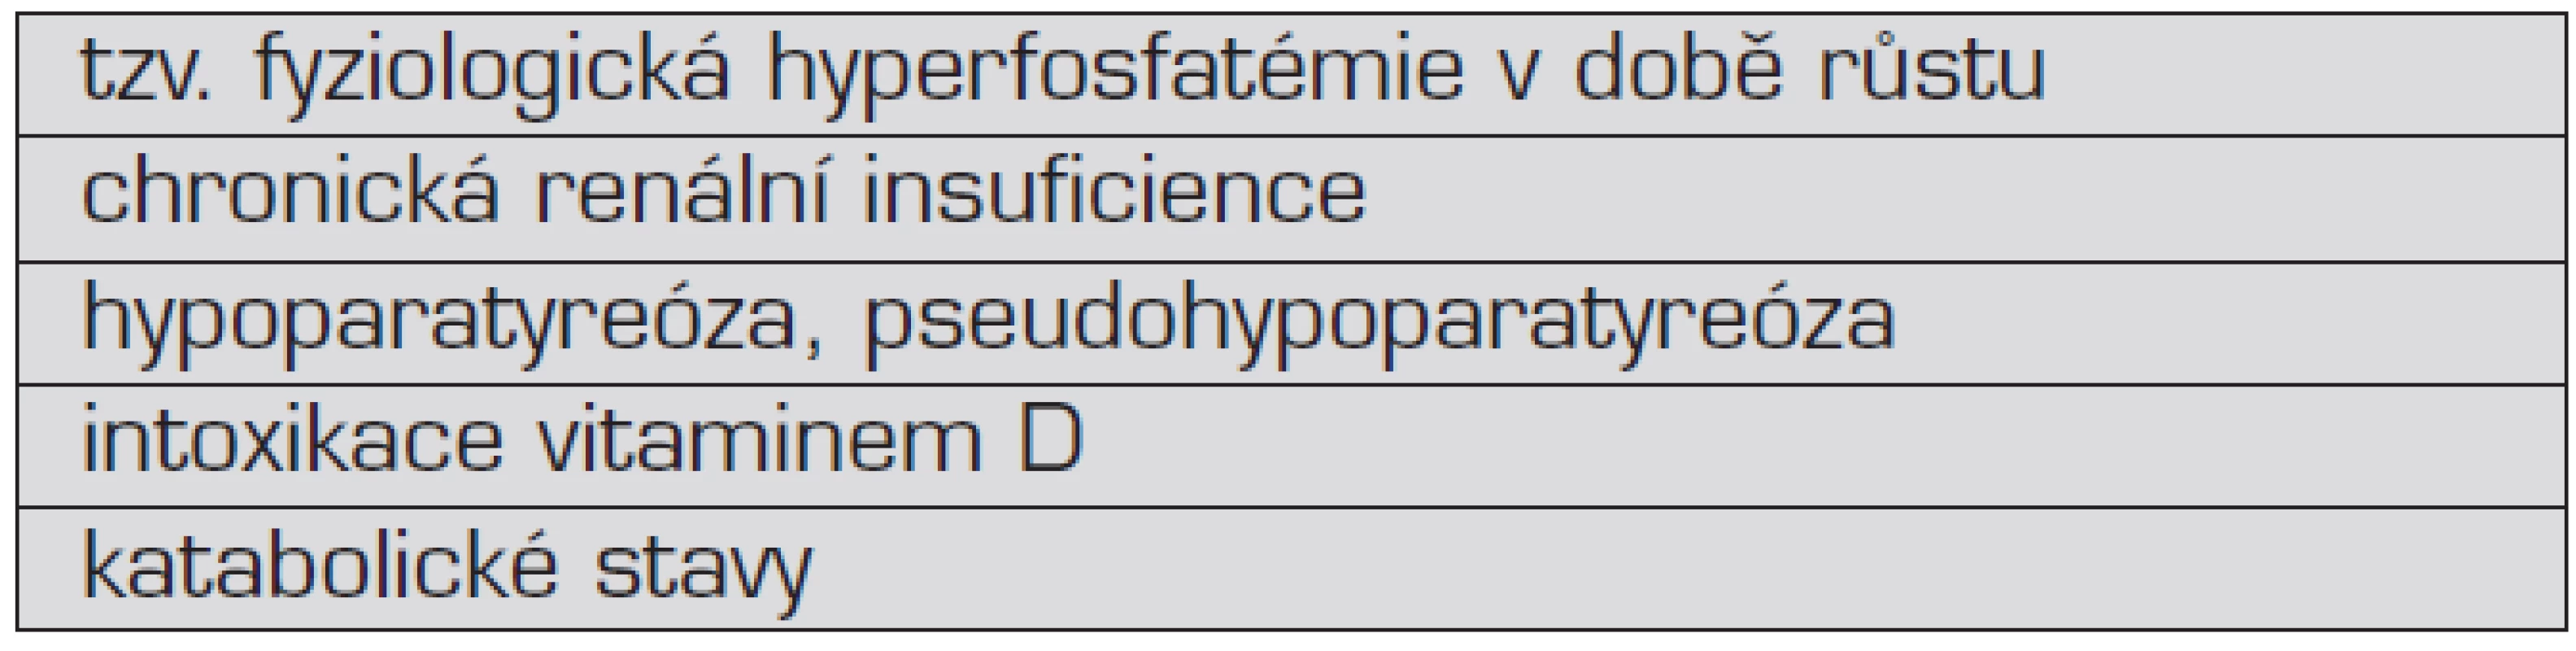 Etiologie hyperfosfatémie.